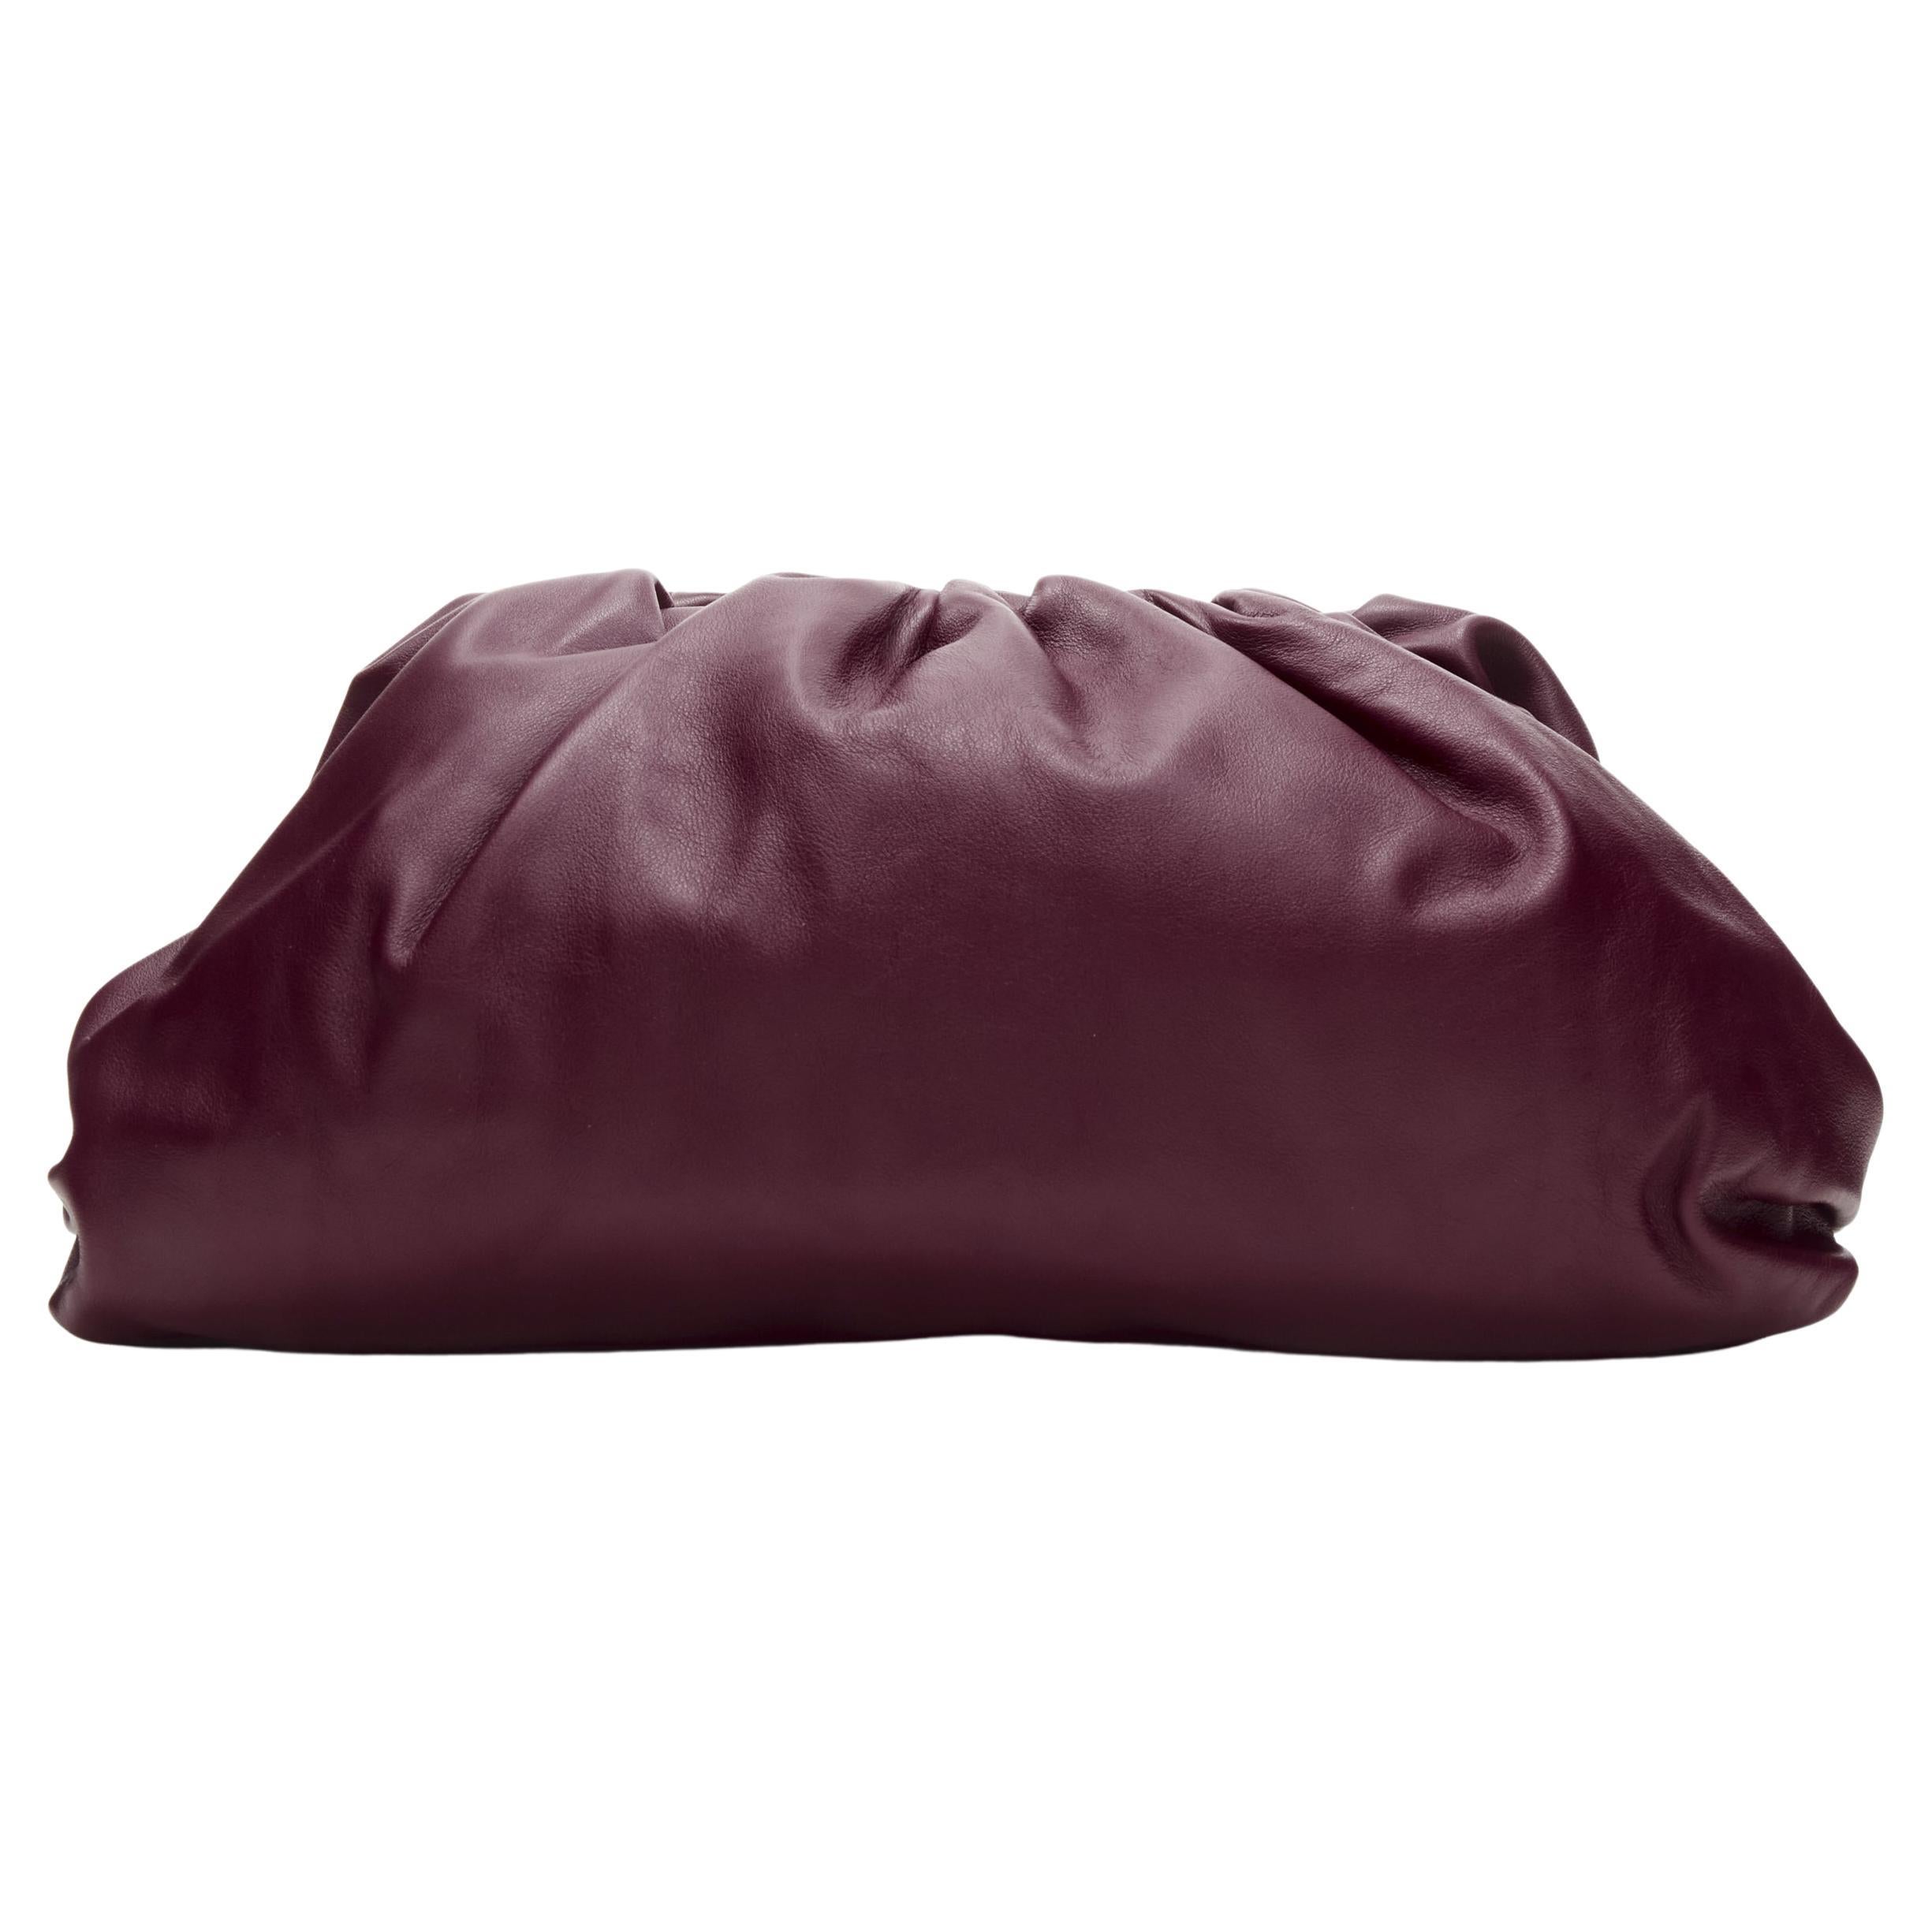 BOTTEGA VENETA The Pouch burgundy red soft lambskin leather clutch bag For Sale